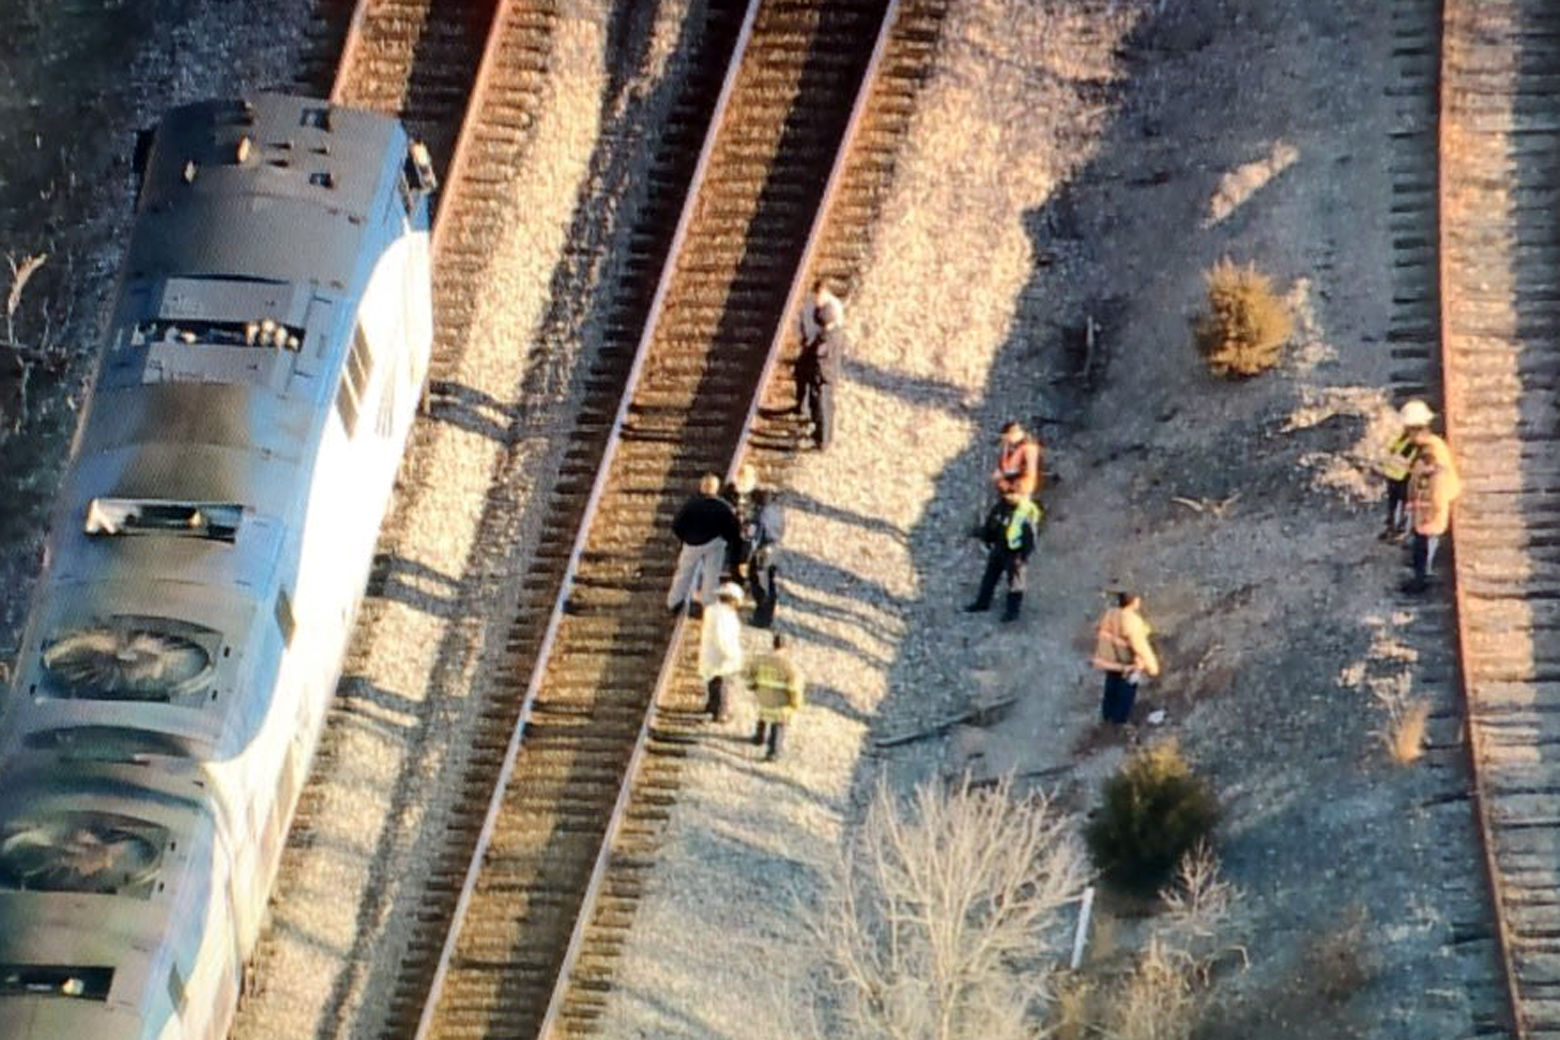 People on the tracks near where an Amtrak train struck a vehicle. (NBC Washington/Brad Freitas)